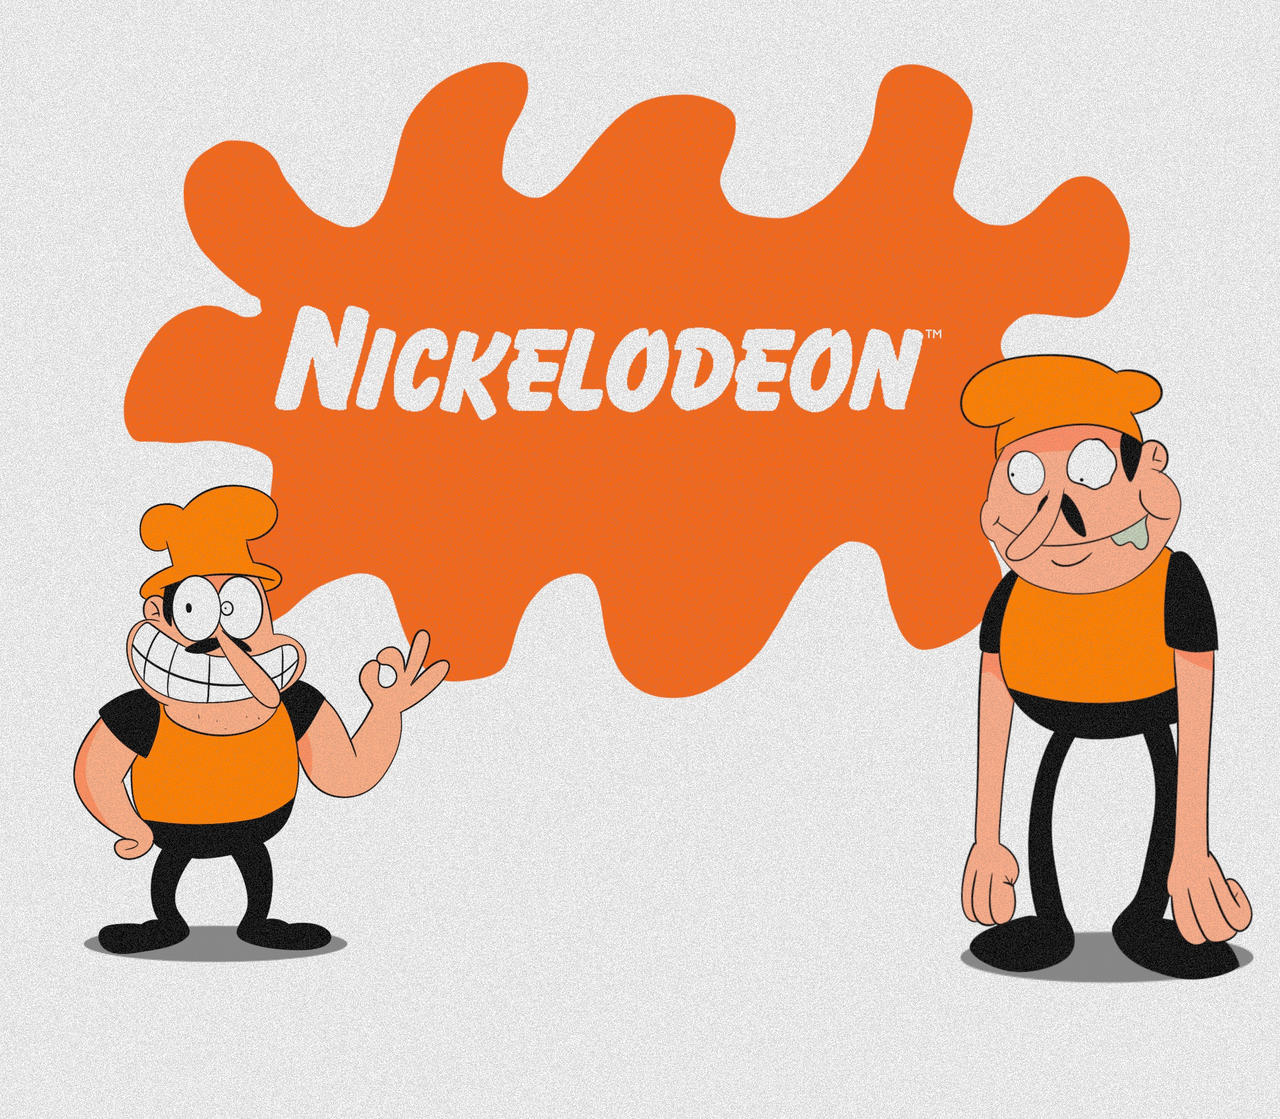 Nickelodeon Pizza Tower Bumper by D4nnyBoi on DeviantArt